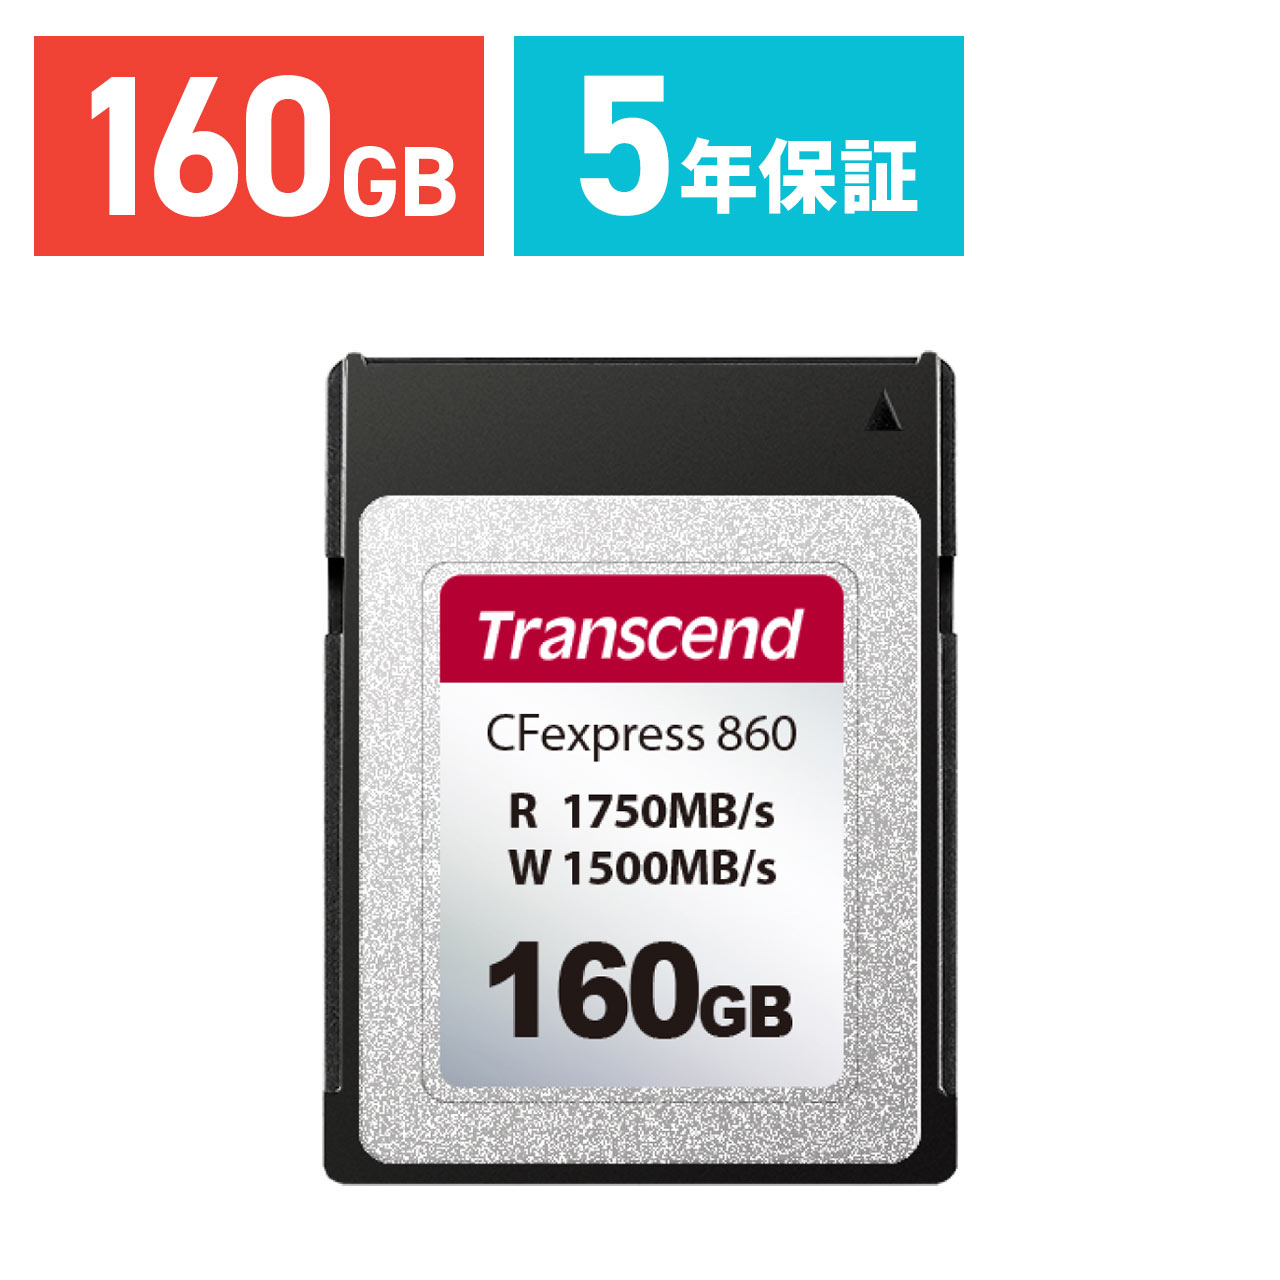 Transcend CFexpress Type B カード 160GB デジタル一眼カメラ 8K RAW動画撮影 CFexpress 2.0規格 CFexpress 860